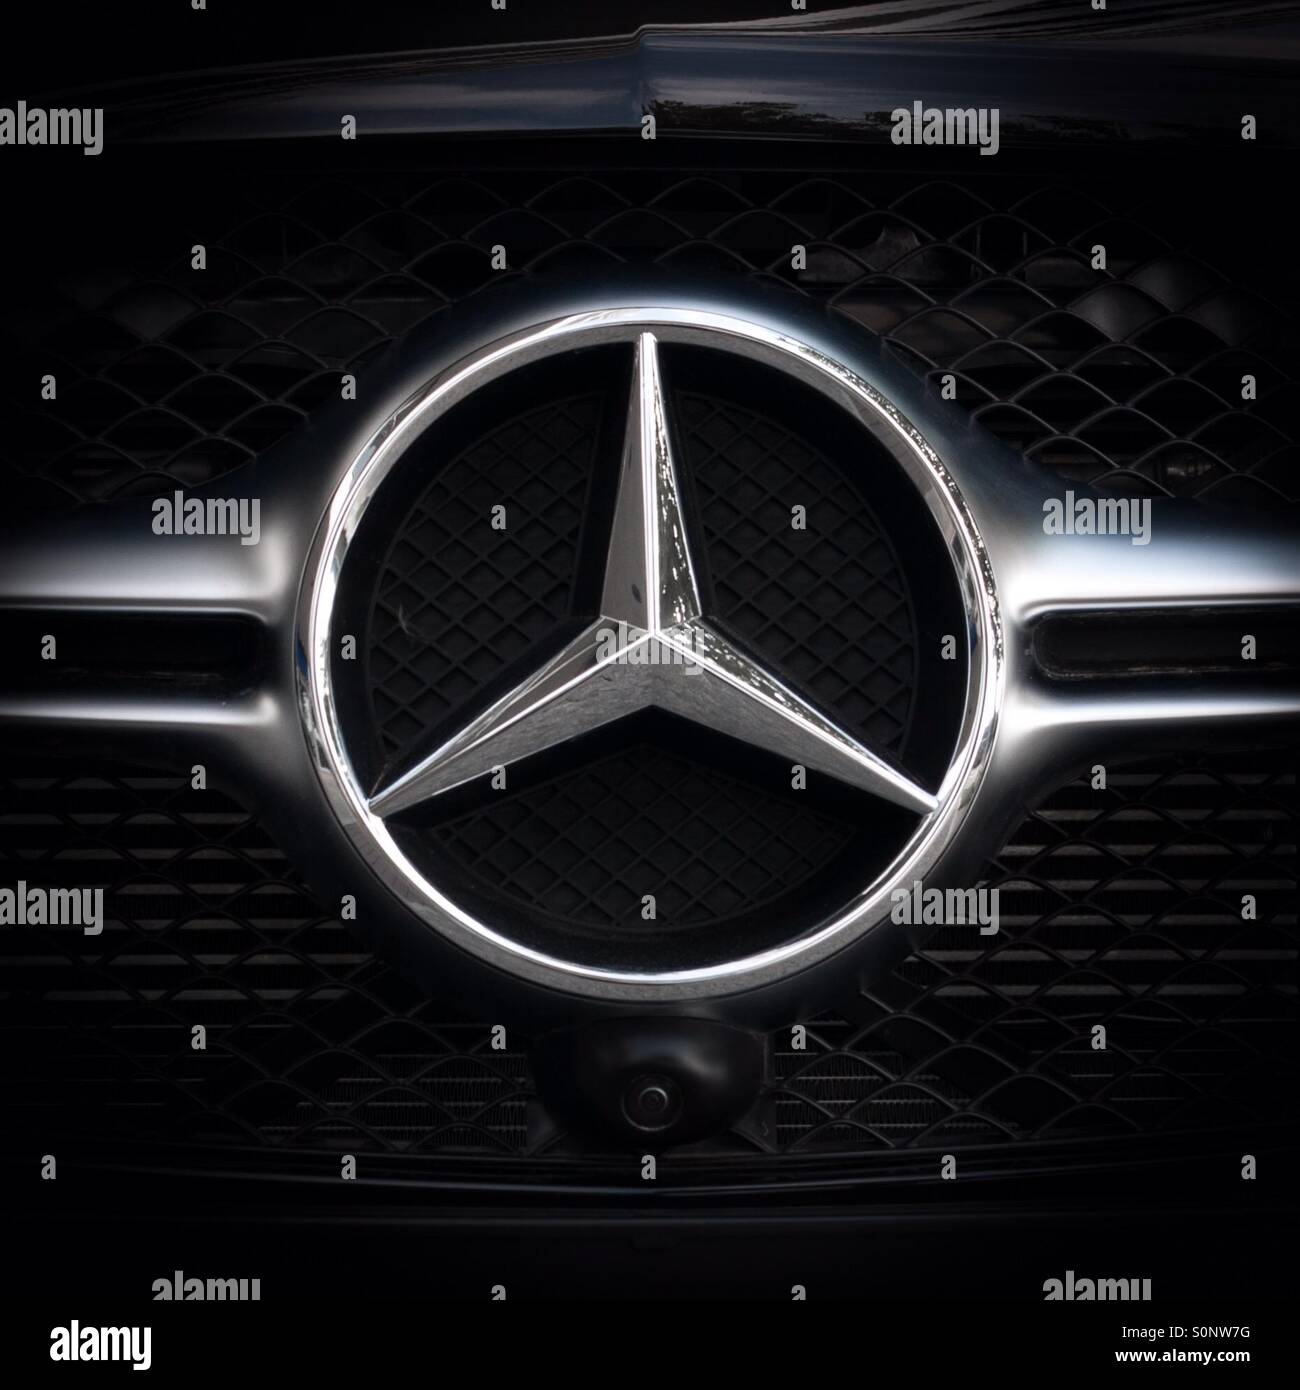 Mercedes-Benz logo on grill detail Stock Photo - Alamy